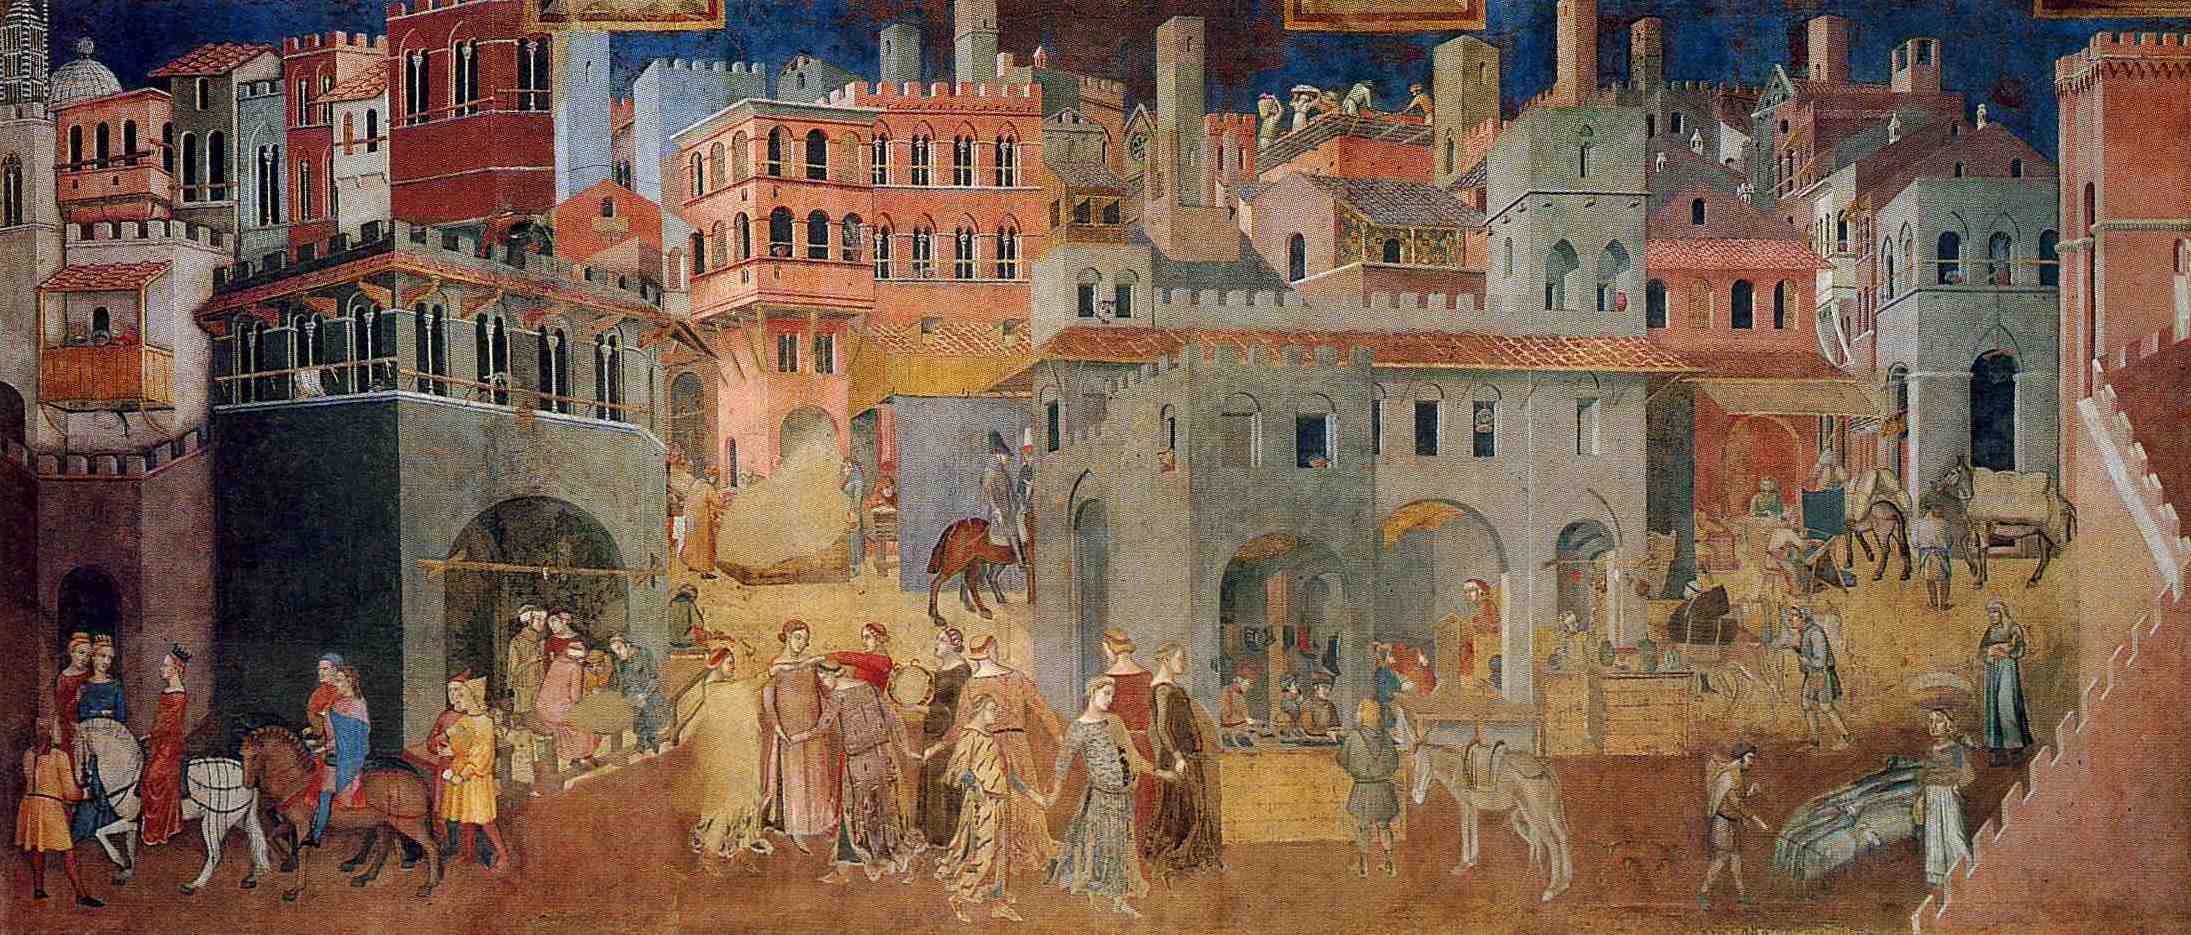 Late Italian Gothic Painting {1300-1348} - Flashcards